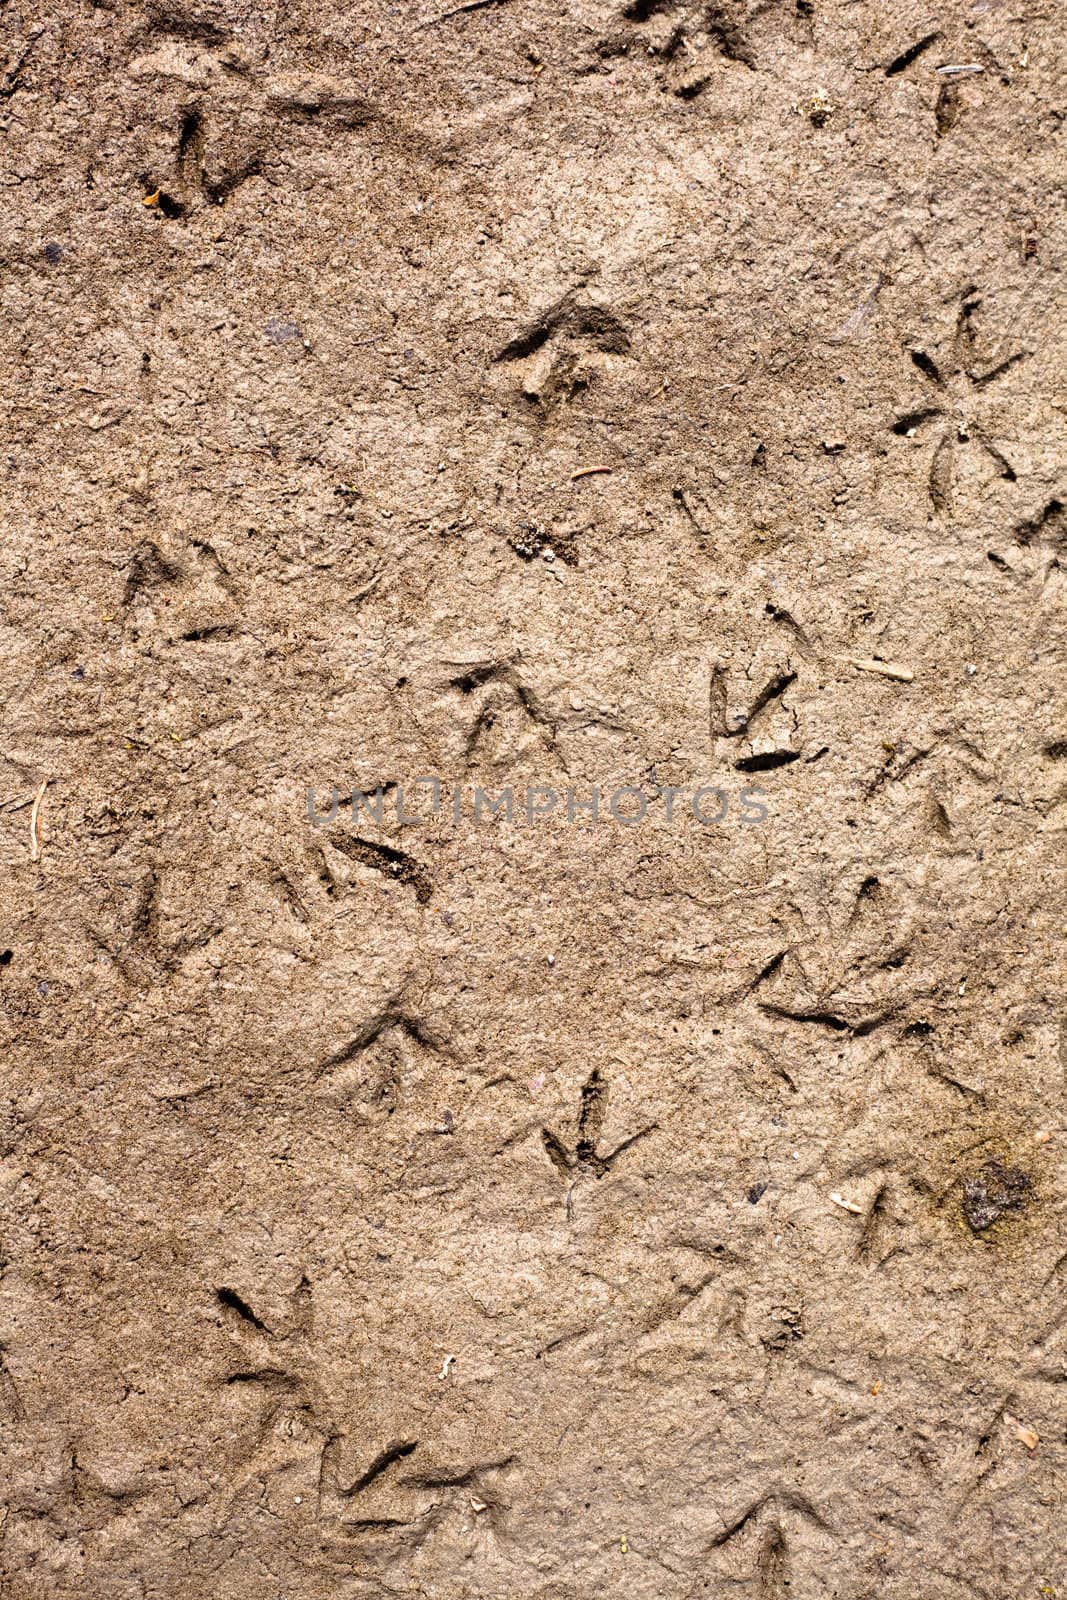 Bird tracks by PiLens